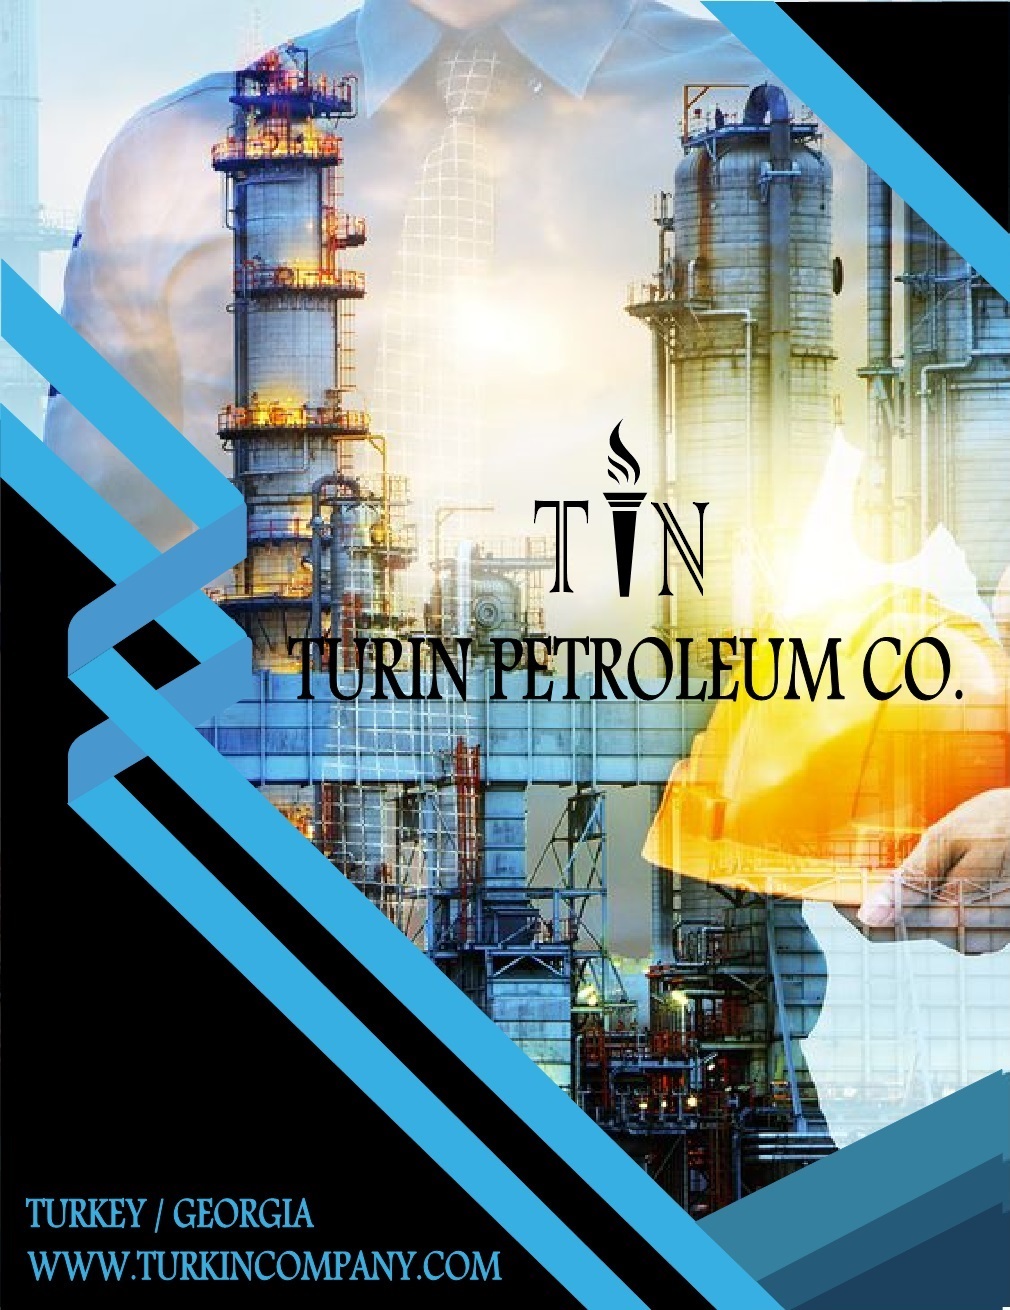 Turin Petroleum